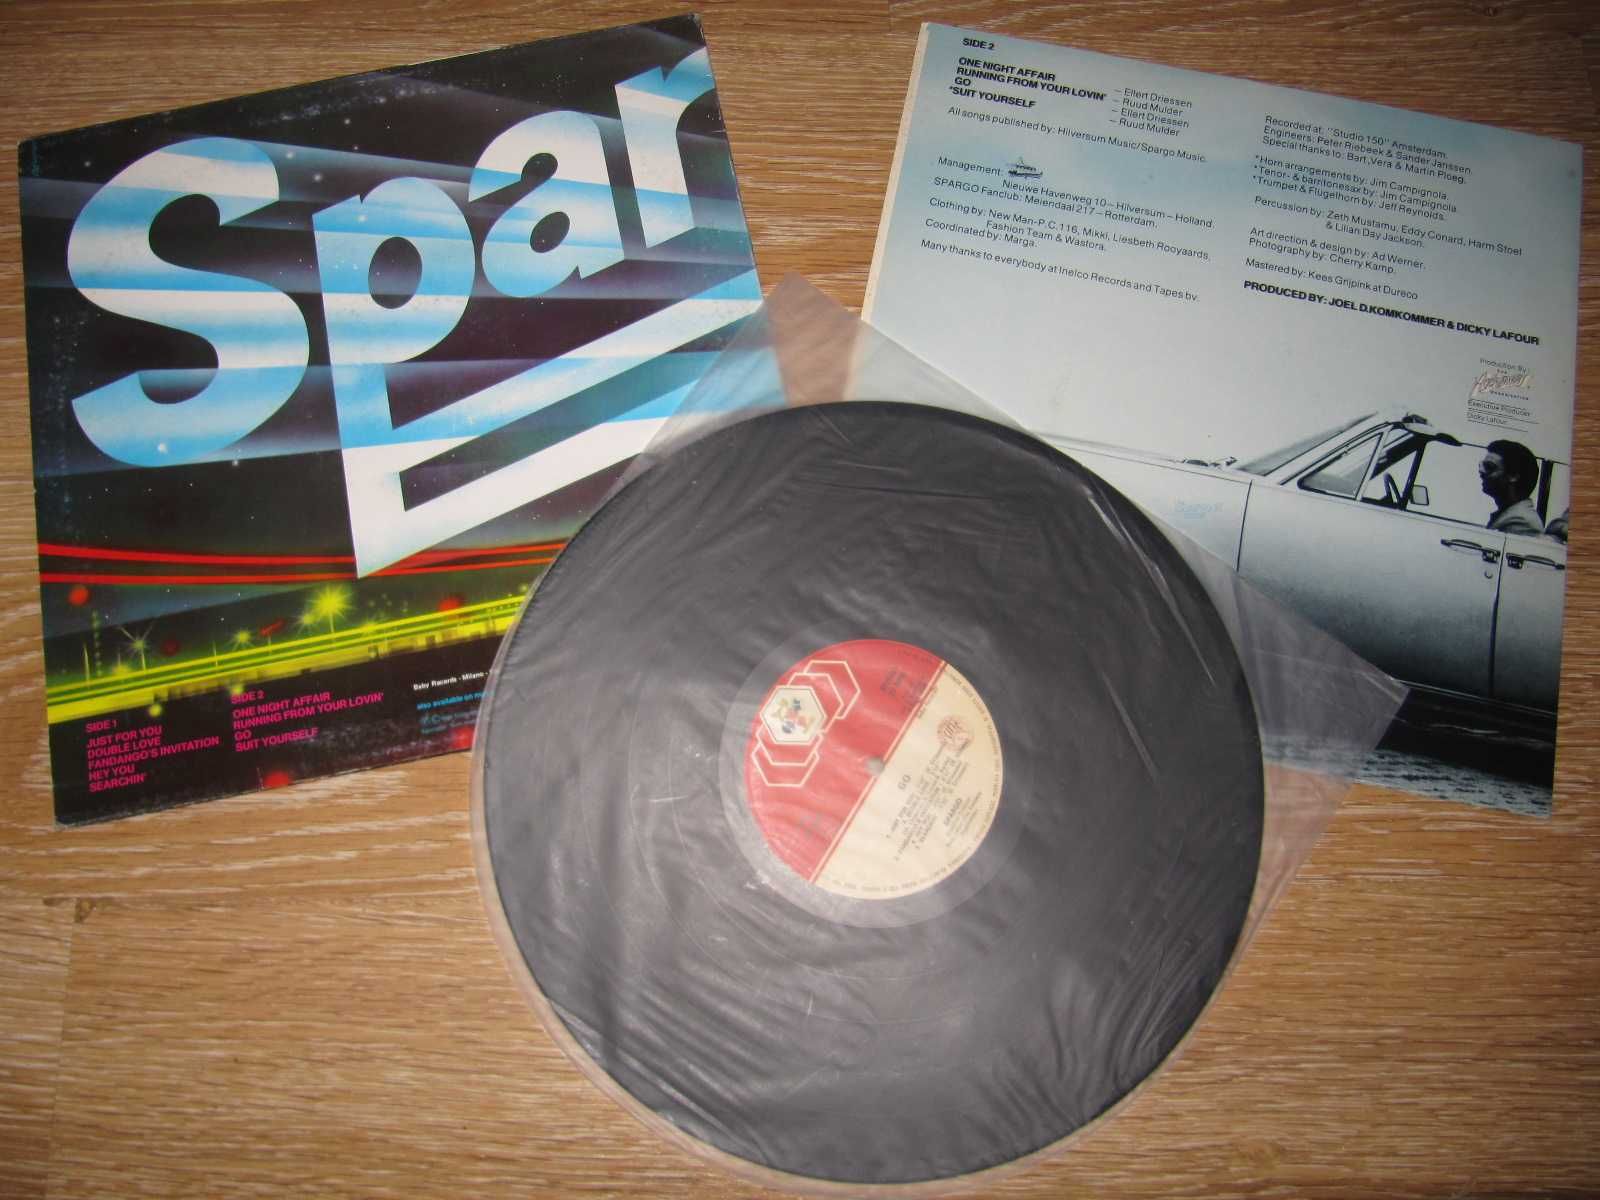 Виниловый Альбом SPARGO - Go - 1981 (made in Italy) Оригинал